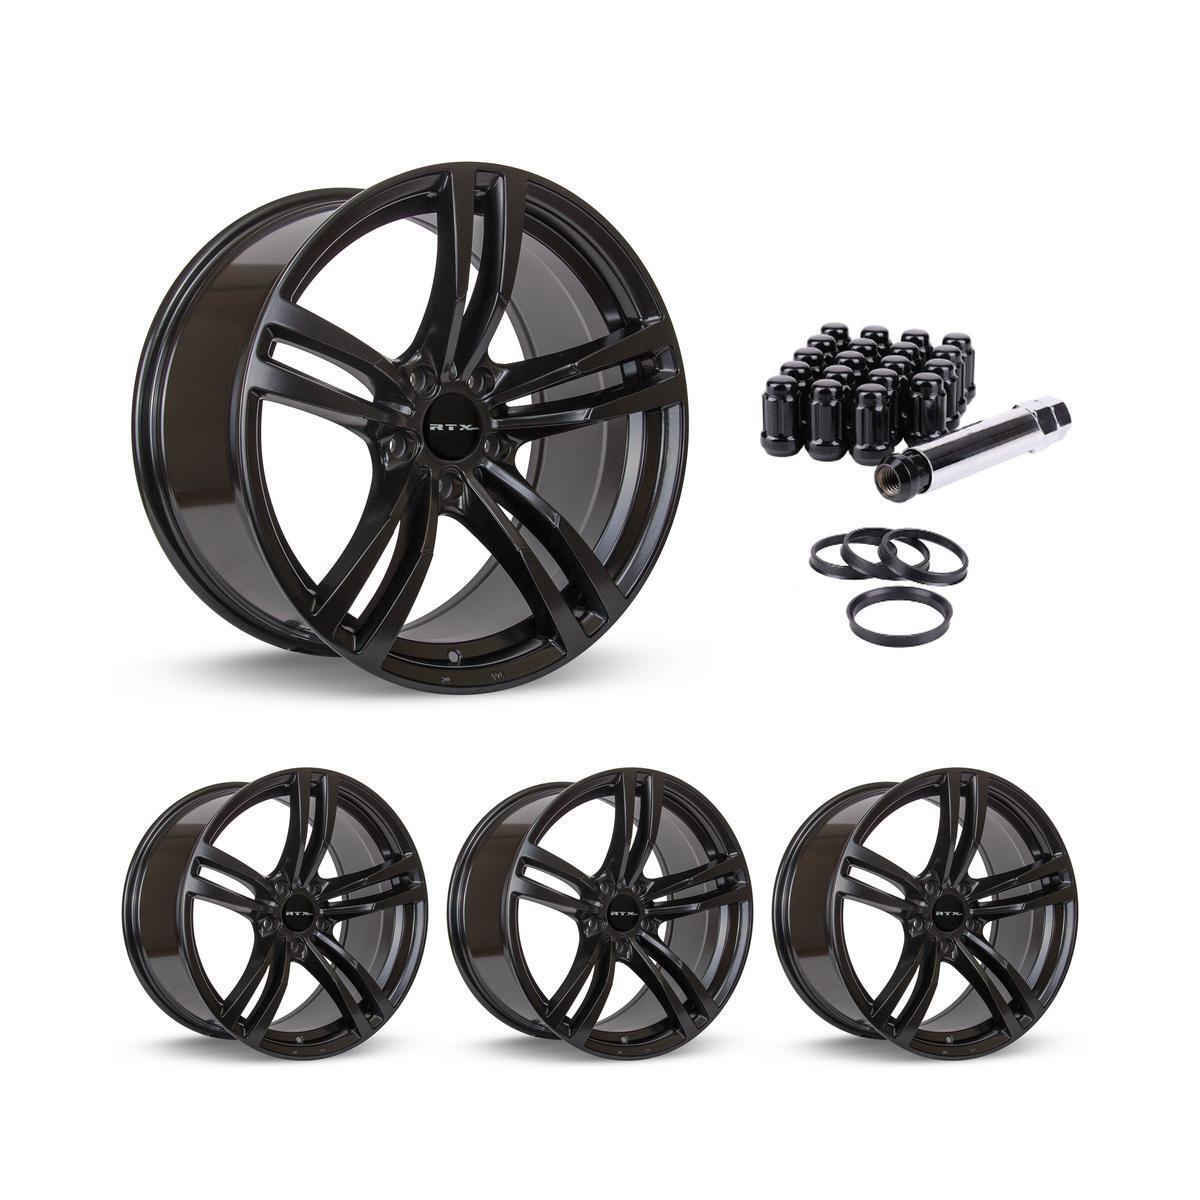 Wheel Rims Set with Black Lug Nuts Kit for 00 BMW 323Ci P829686 19 inch